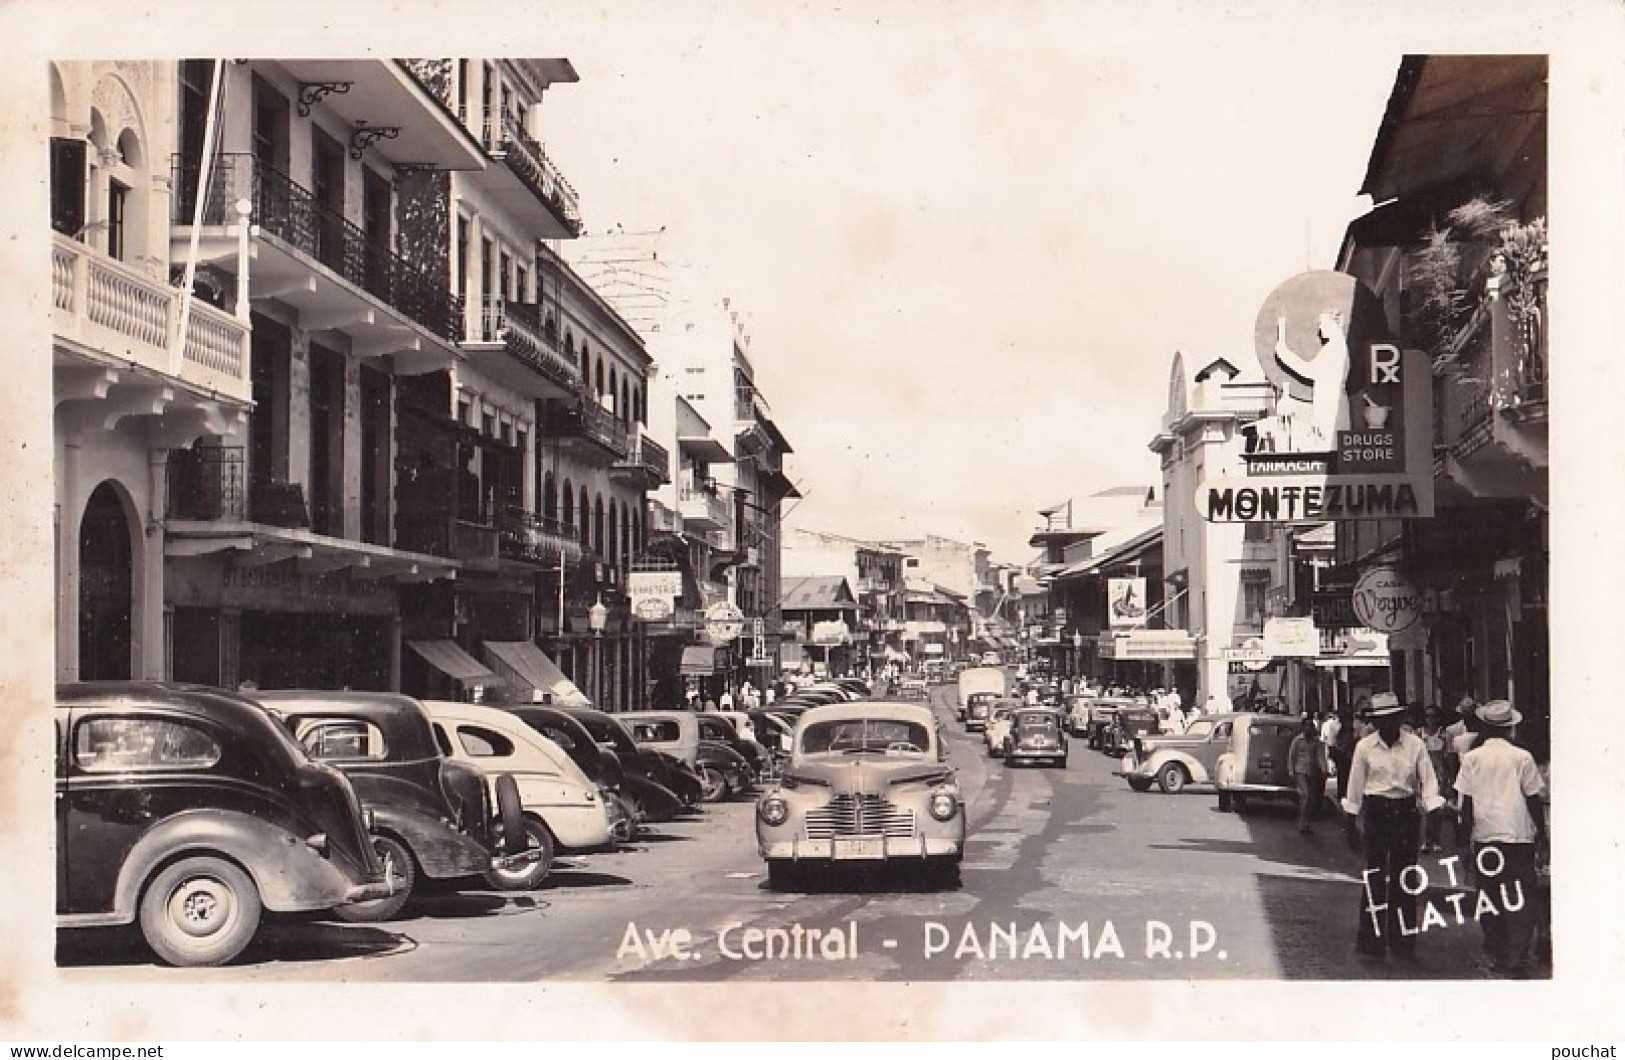 A22-  PANAMA   R.P. - AVE. CENTRAL - FOTO  LATAU  - ( 2 SCANS ) - Panama